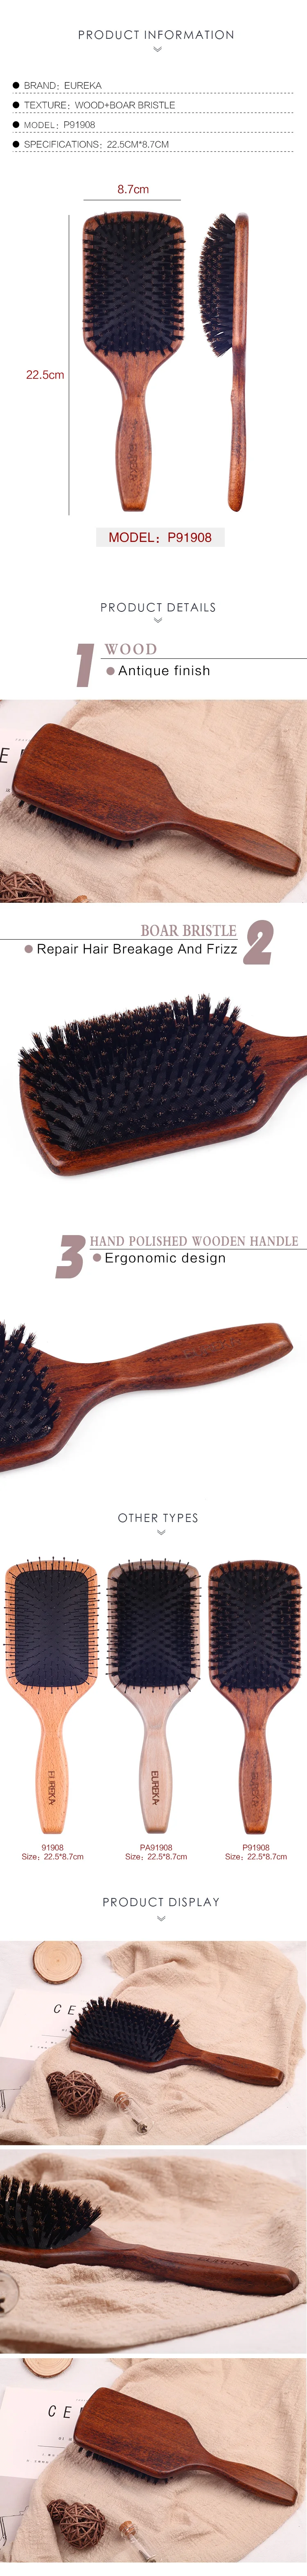 EUREKA P91908 Engraved Boar Bristle Hair Brush Wood Hair Brush Massage Classical Style Hair Brush